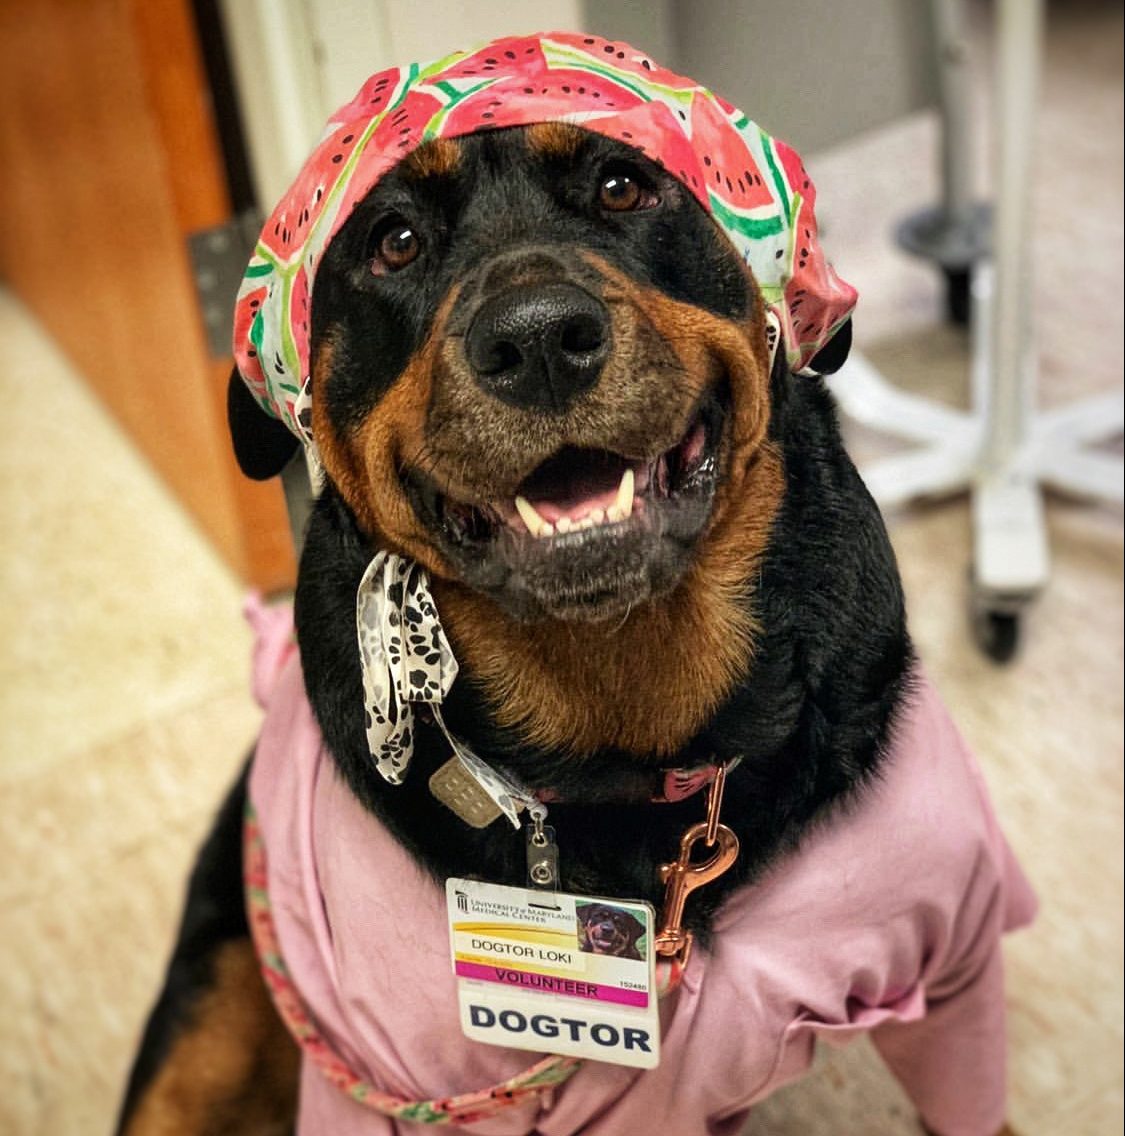 Therapy dog Dogtor Loki in pink scrubs